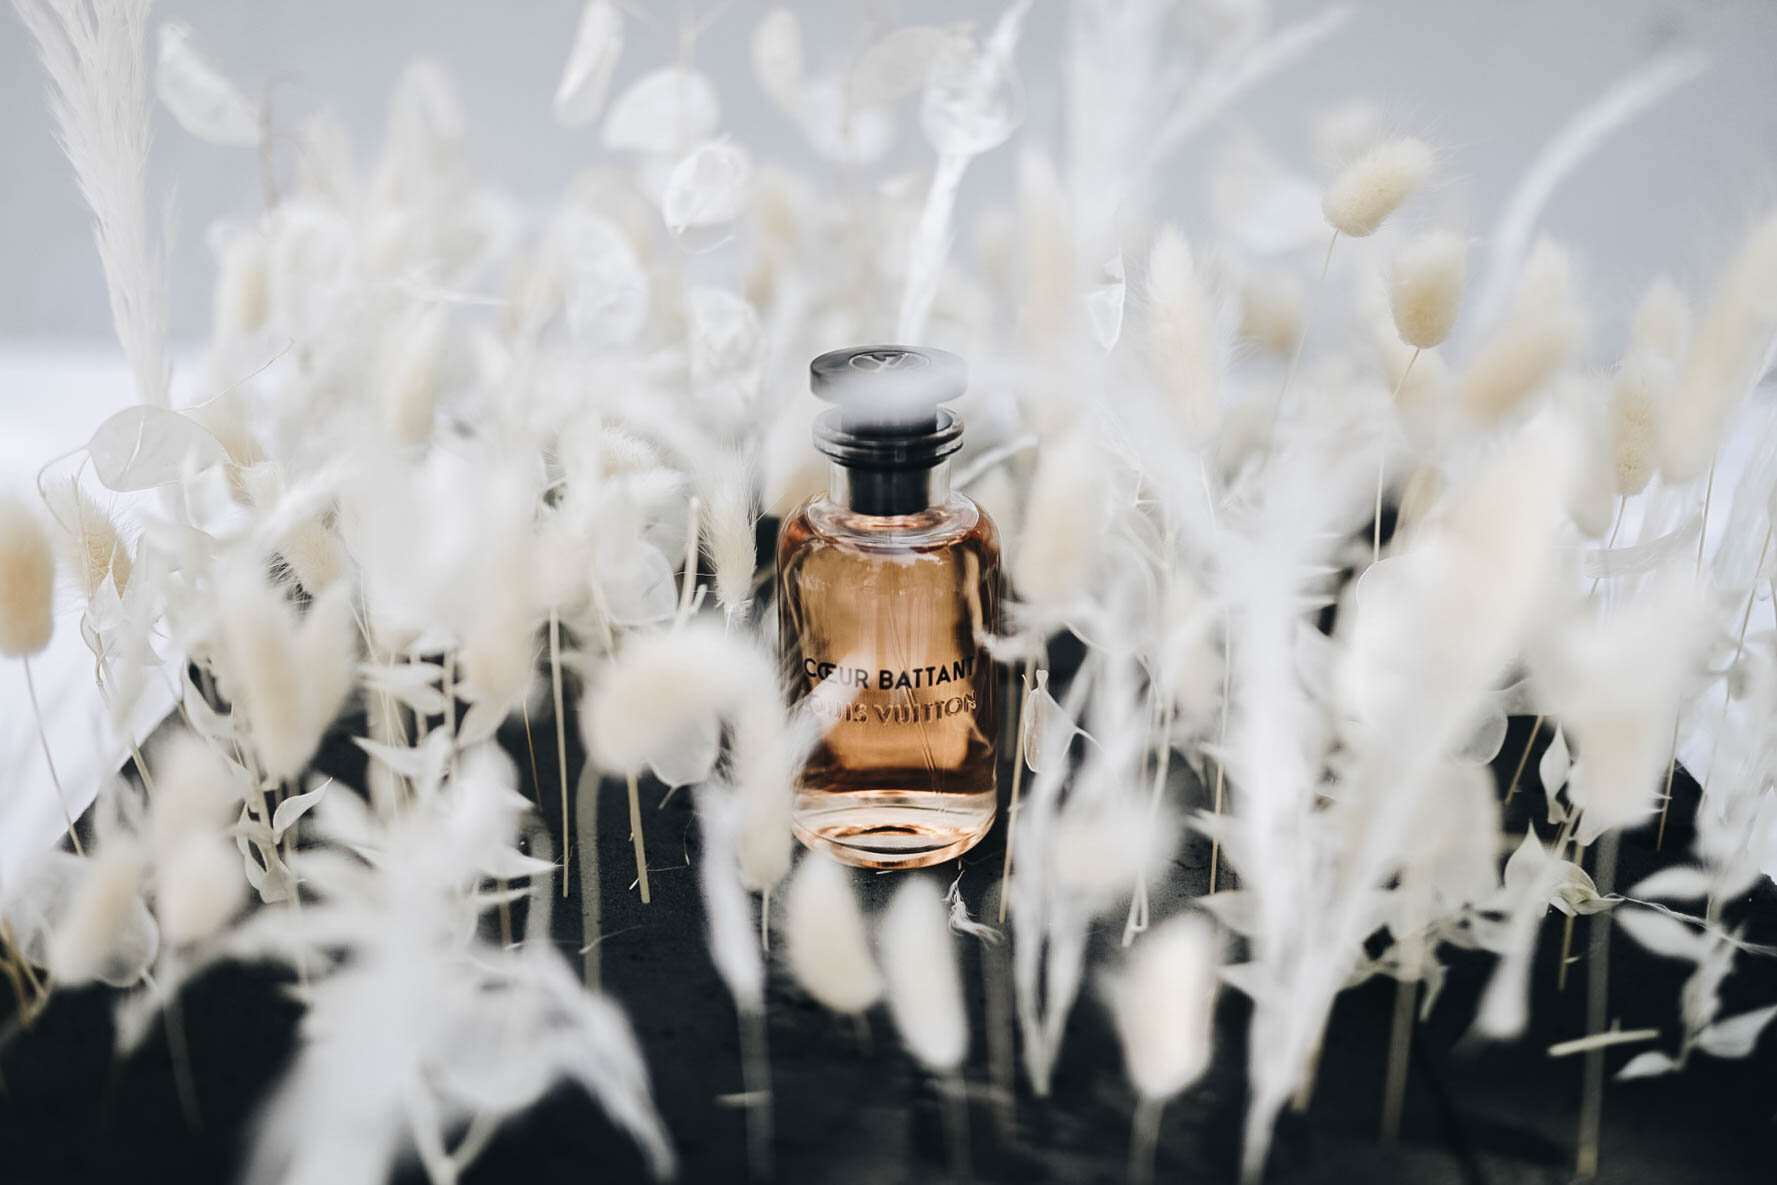 Coeur Battant by Louis Vuitton  Perfume lover, Perfume design, Perfume  collection